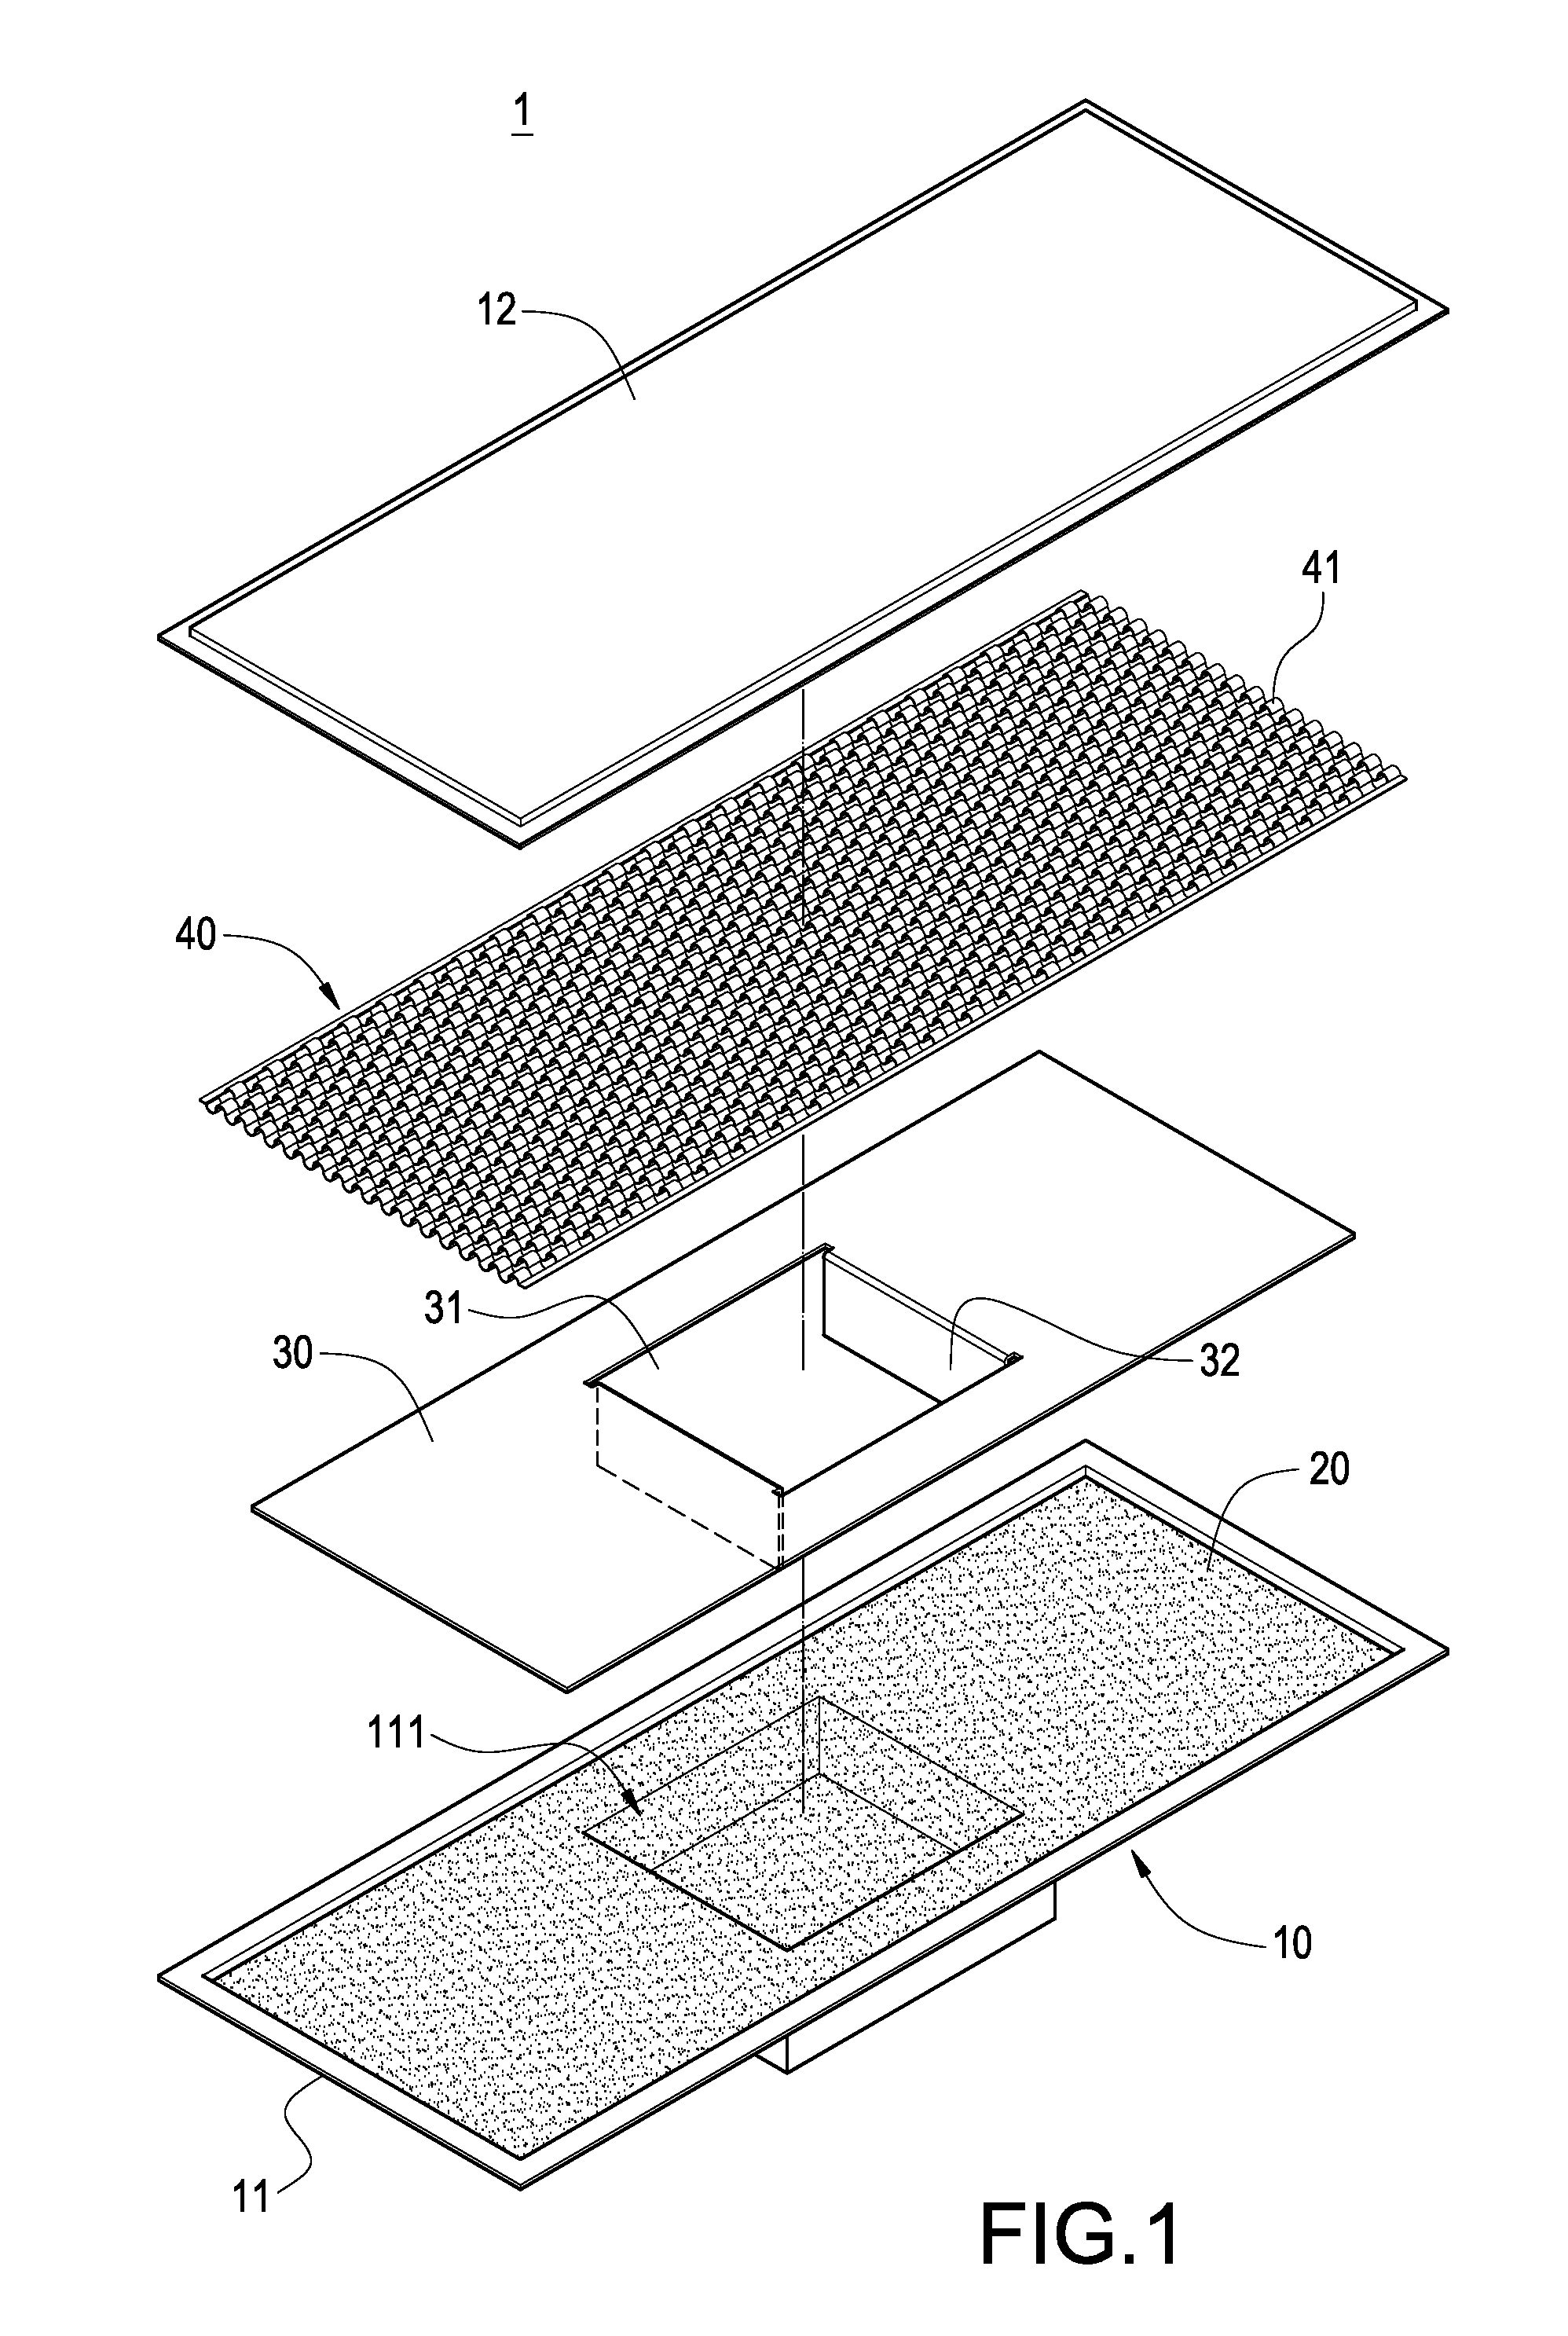 Vapor chamber with separator